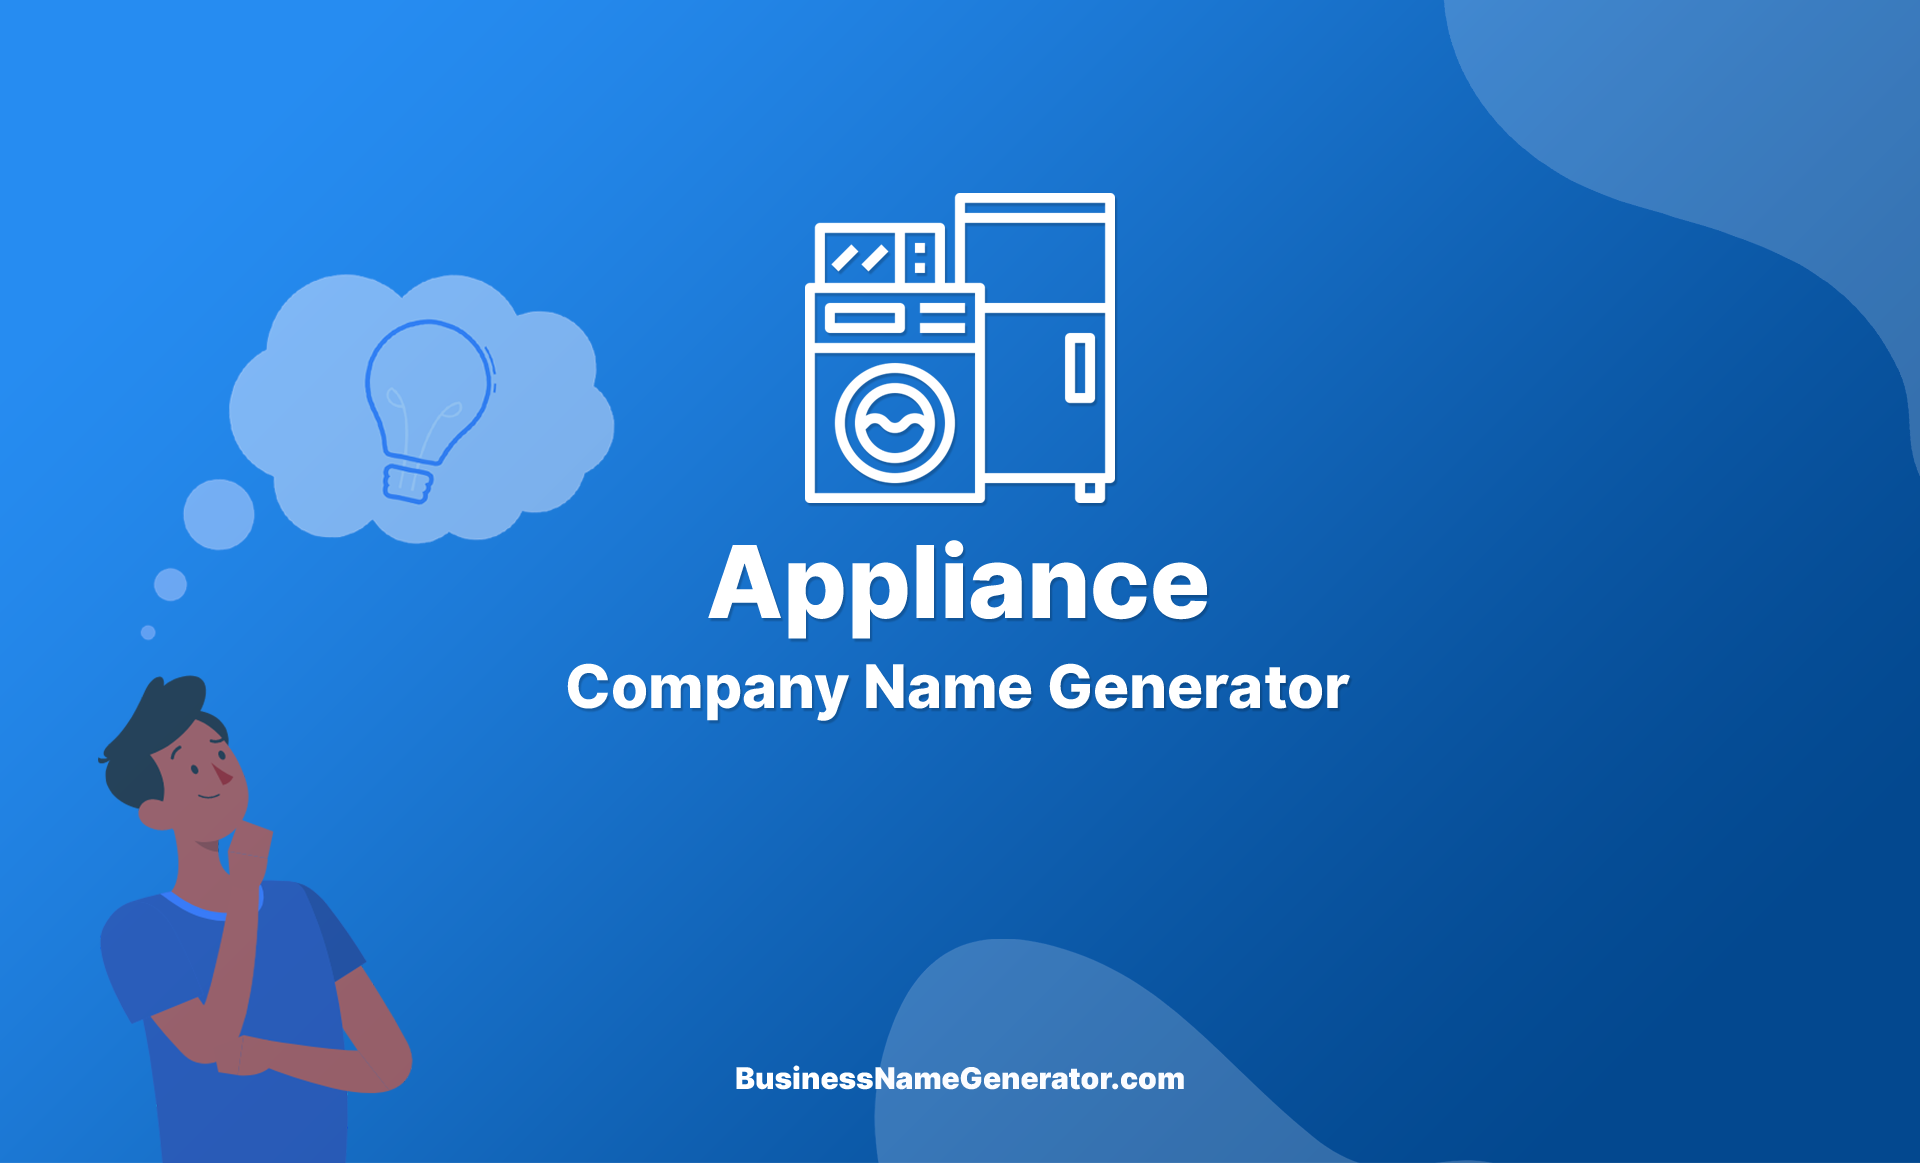 Appliance Company Name Generator